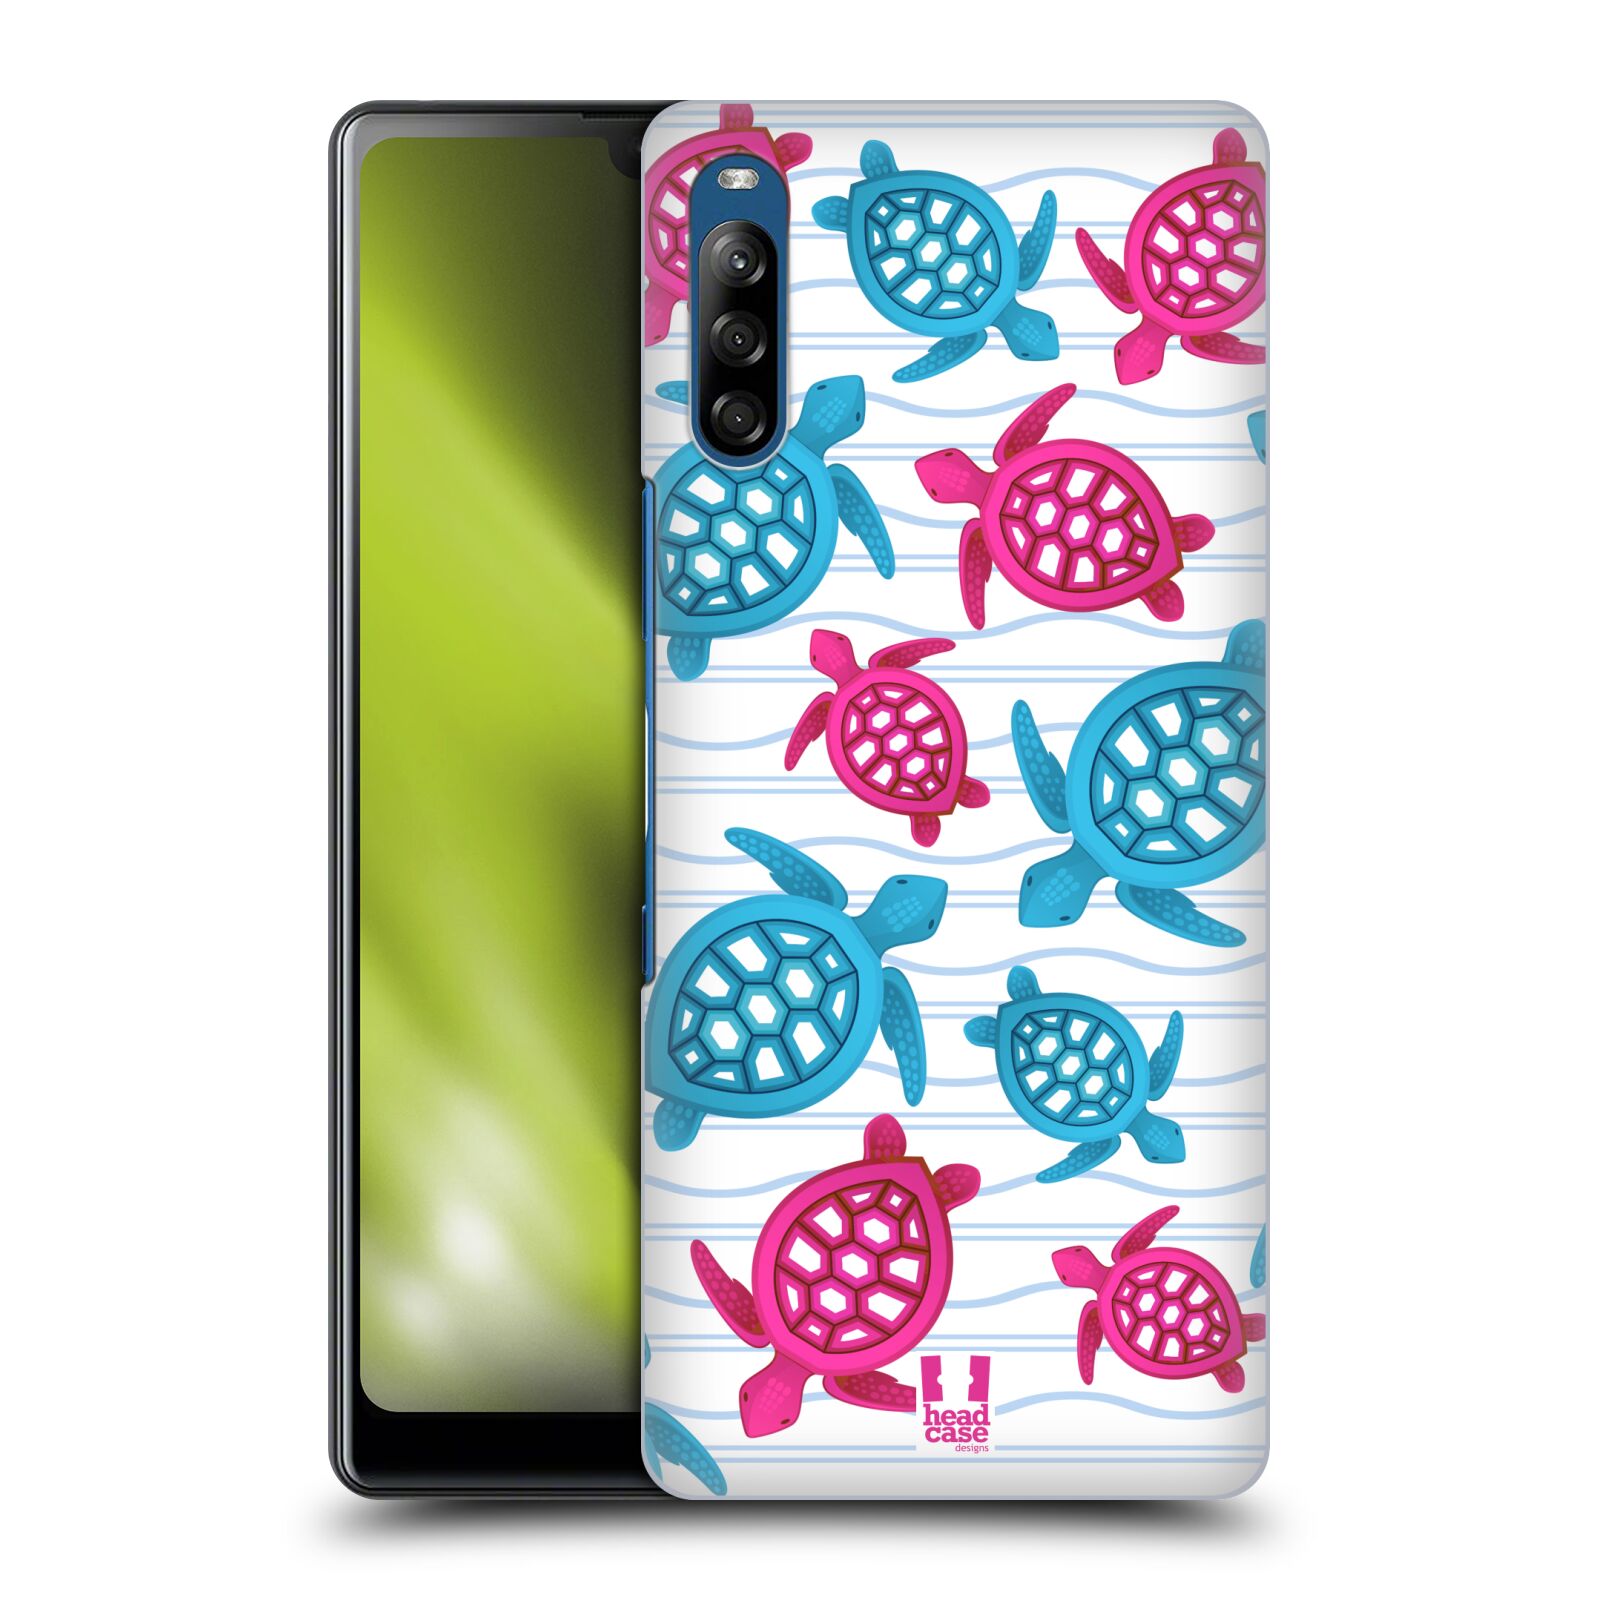 Zadní obal pro mobil Sony Xperia L4 - HEAD CASE - kreslený mořský vzor želvičky